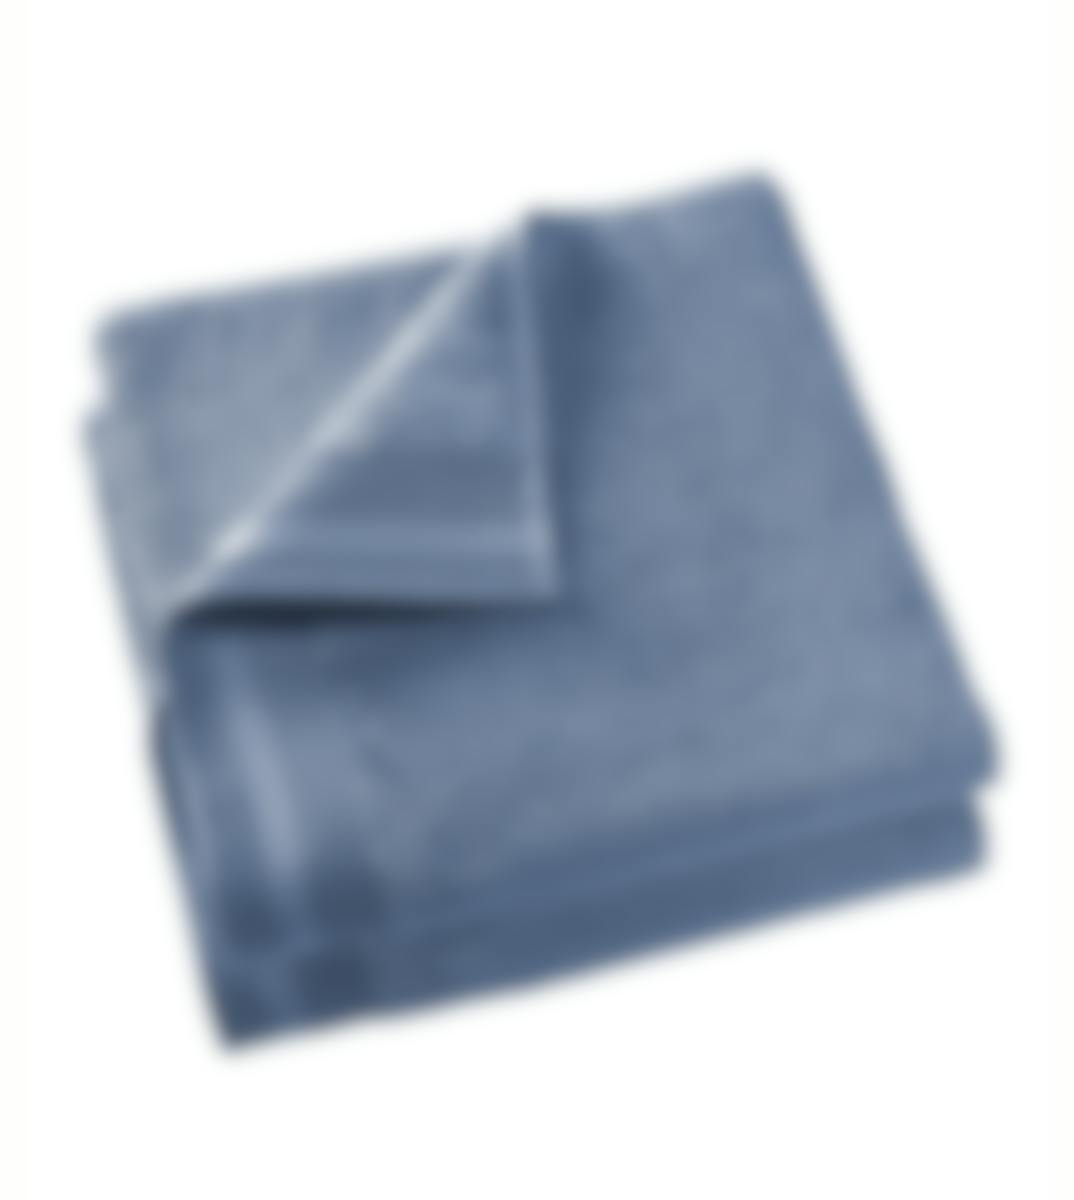 De Witte Lietaer serviette de bain Contessa stone blue